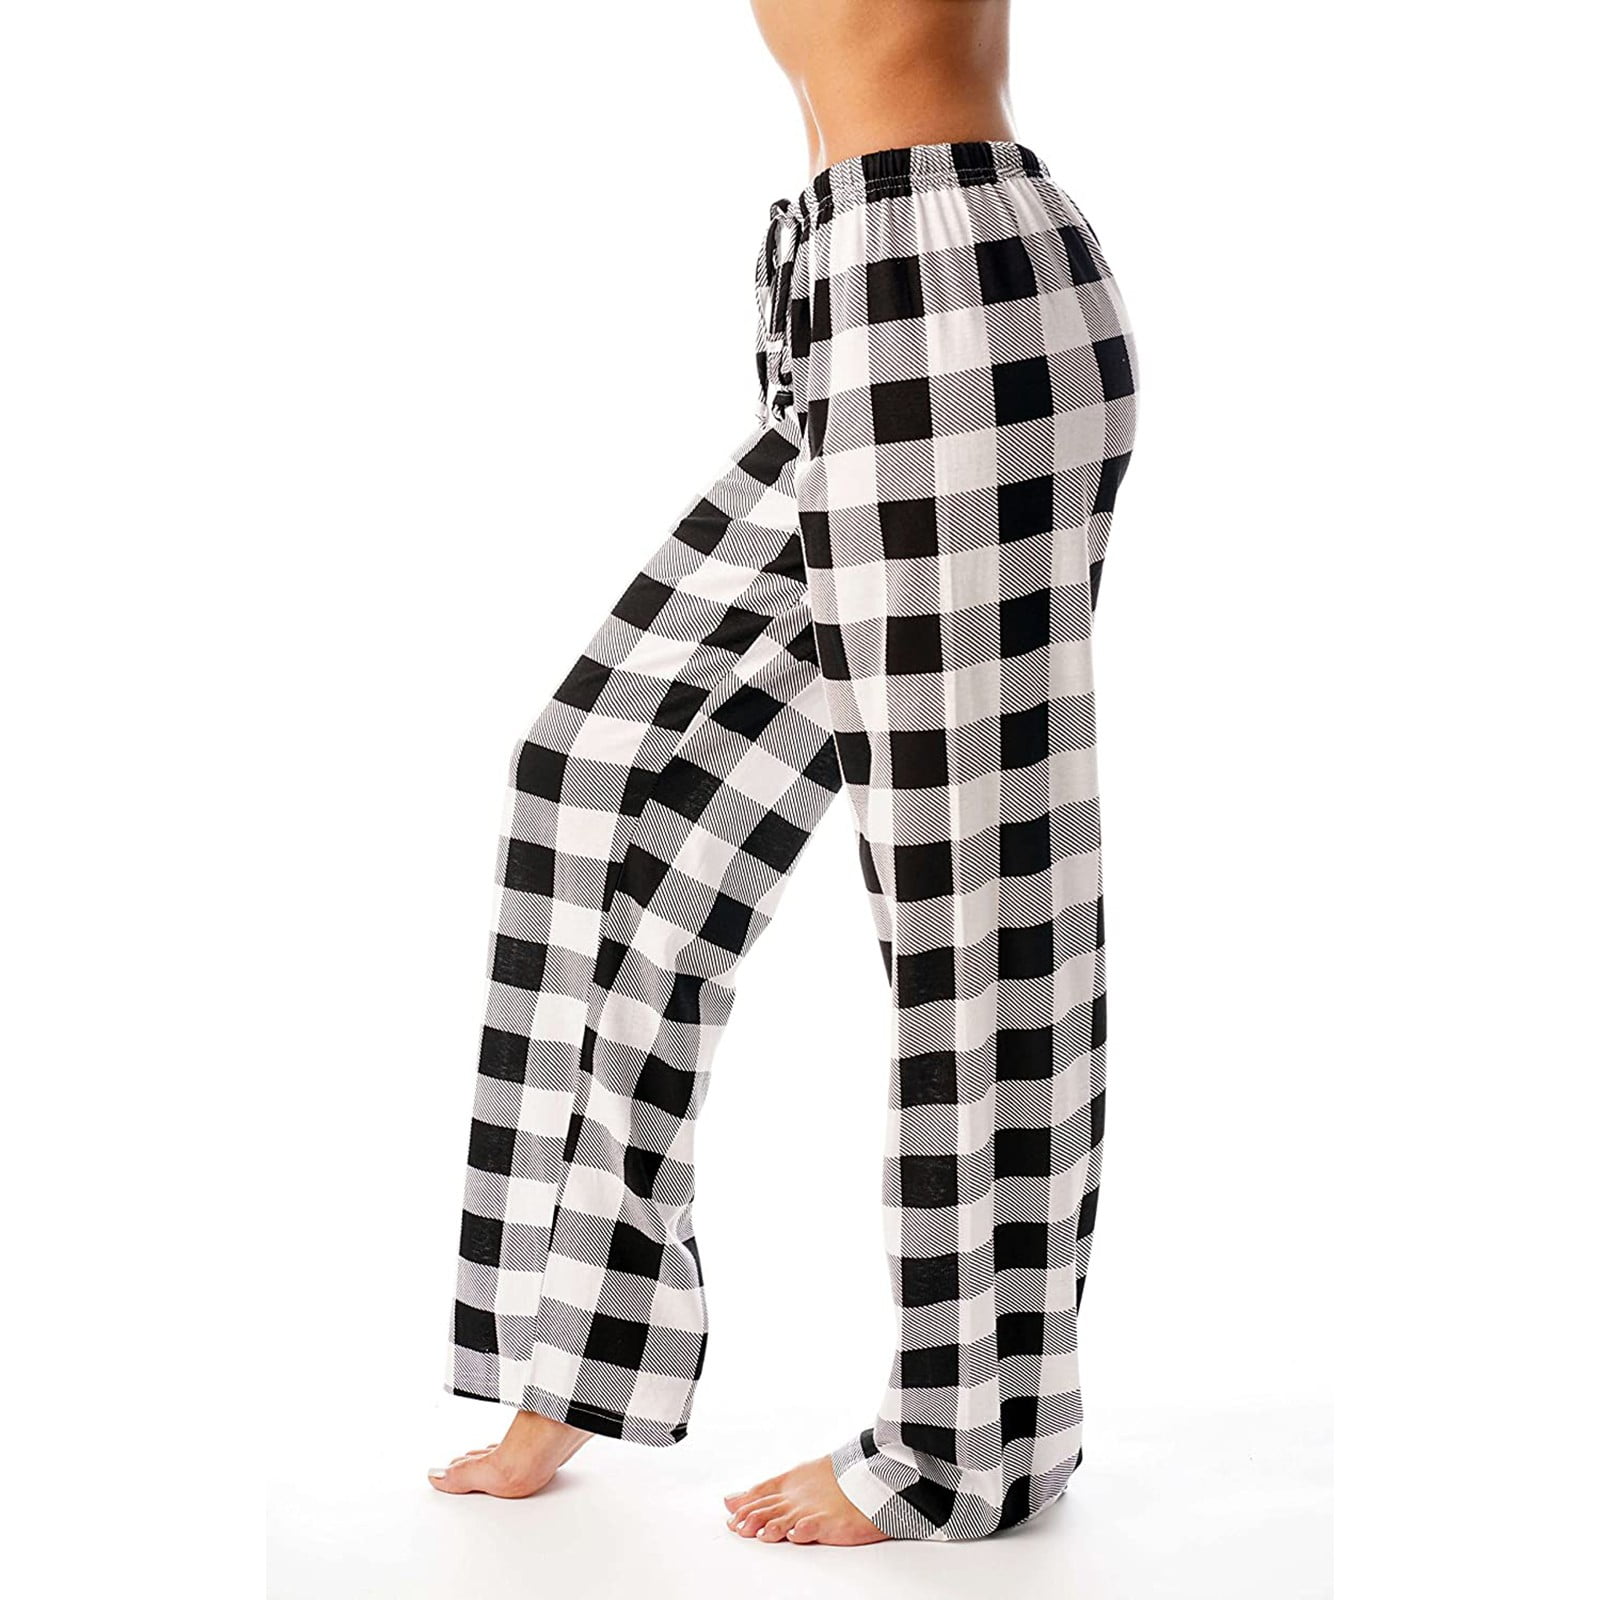 Ydkzymd Women's Plaid Pajama Pants Pockets Flannel Buffalo Plaid Lounge ...